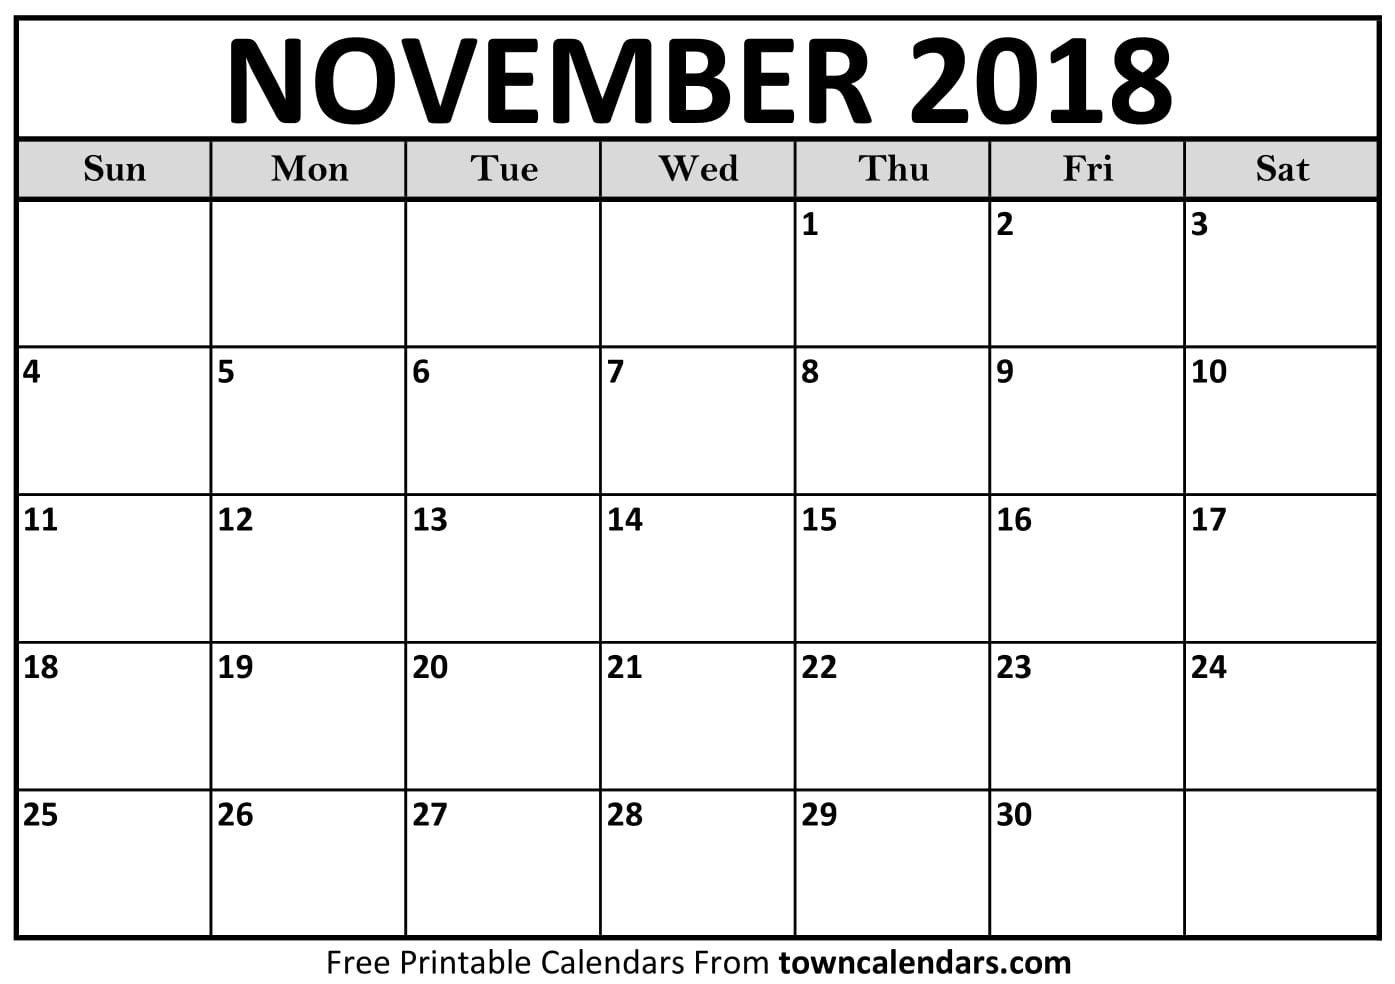 Printable November 2018 Calendar Towncalendars